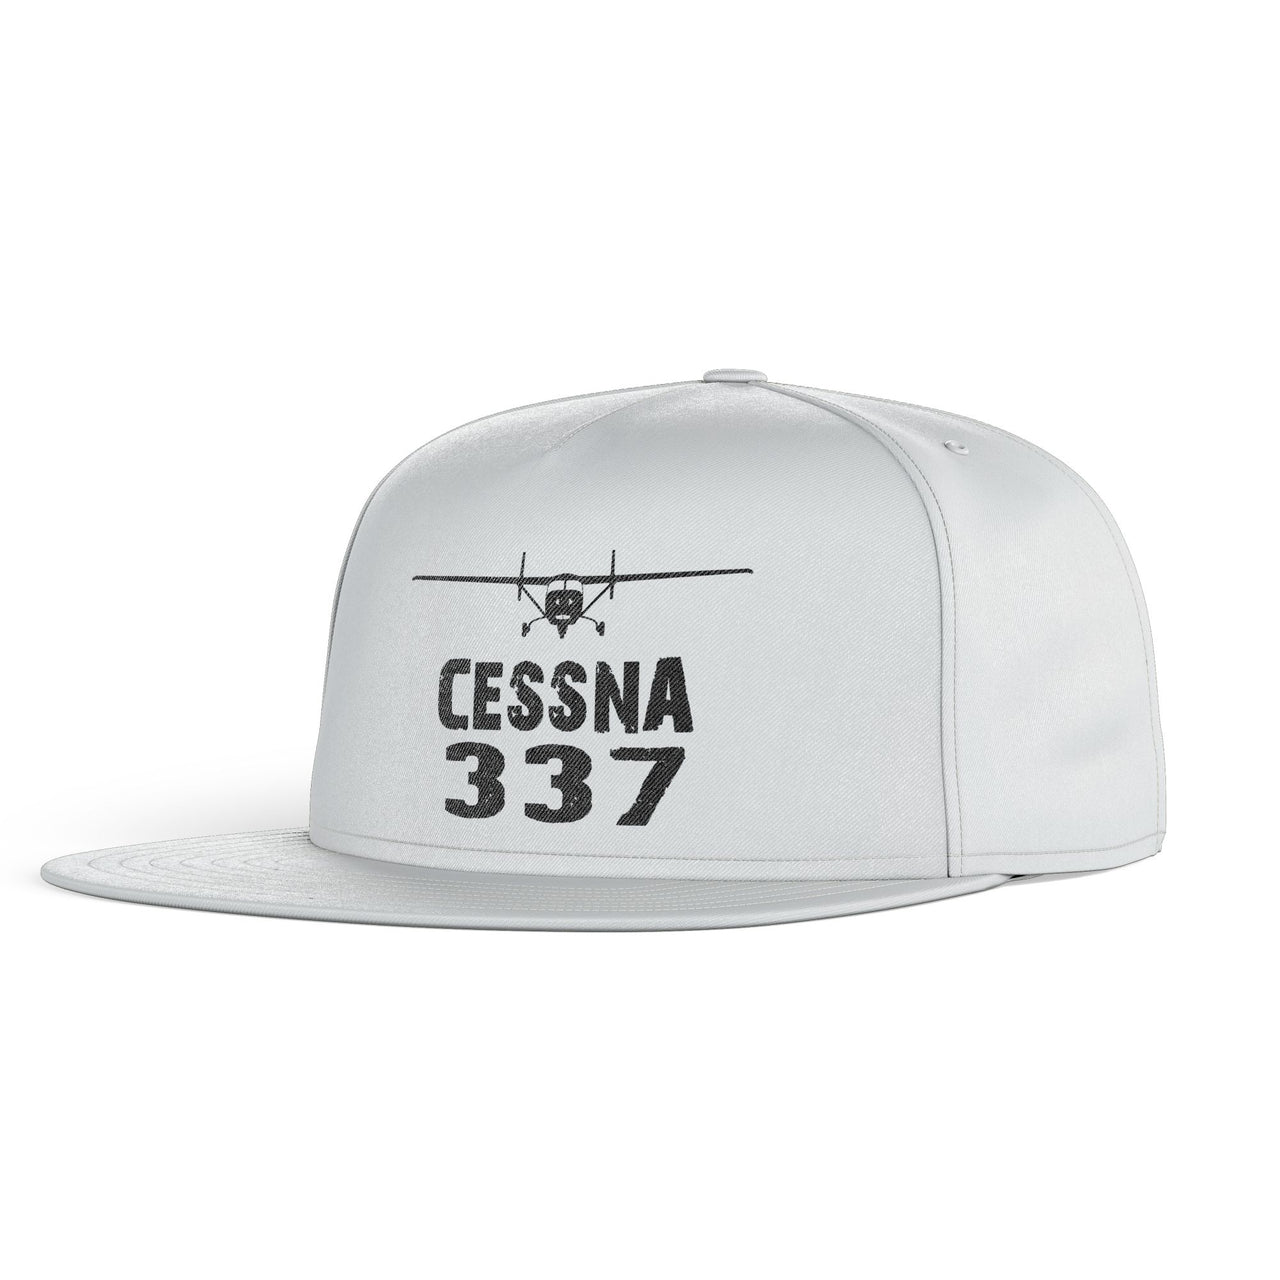 Cessna 337 & Plane Designed Snapback Caps & Hats